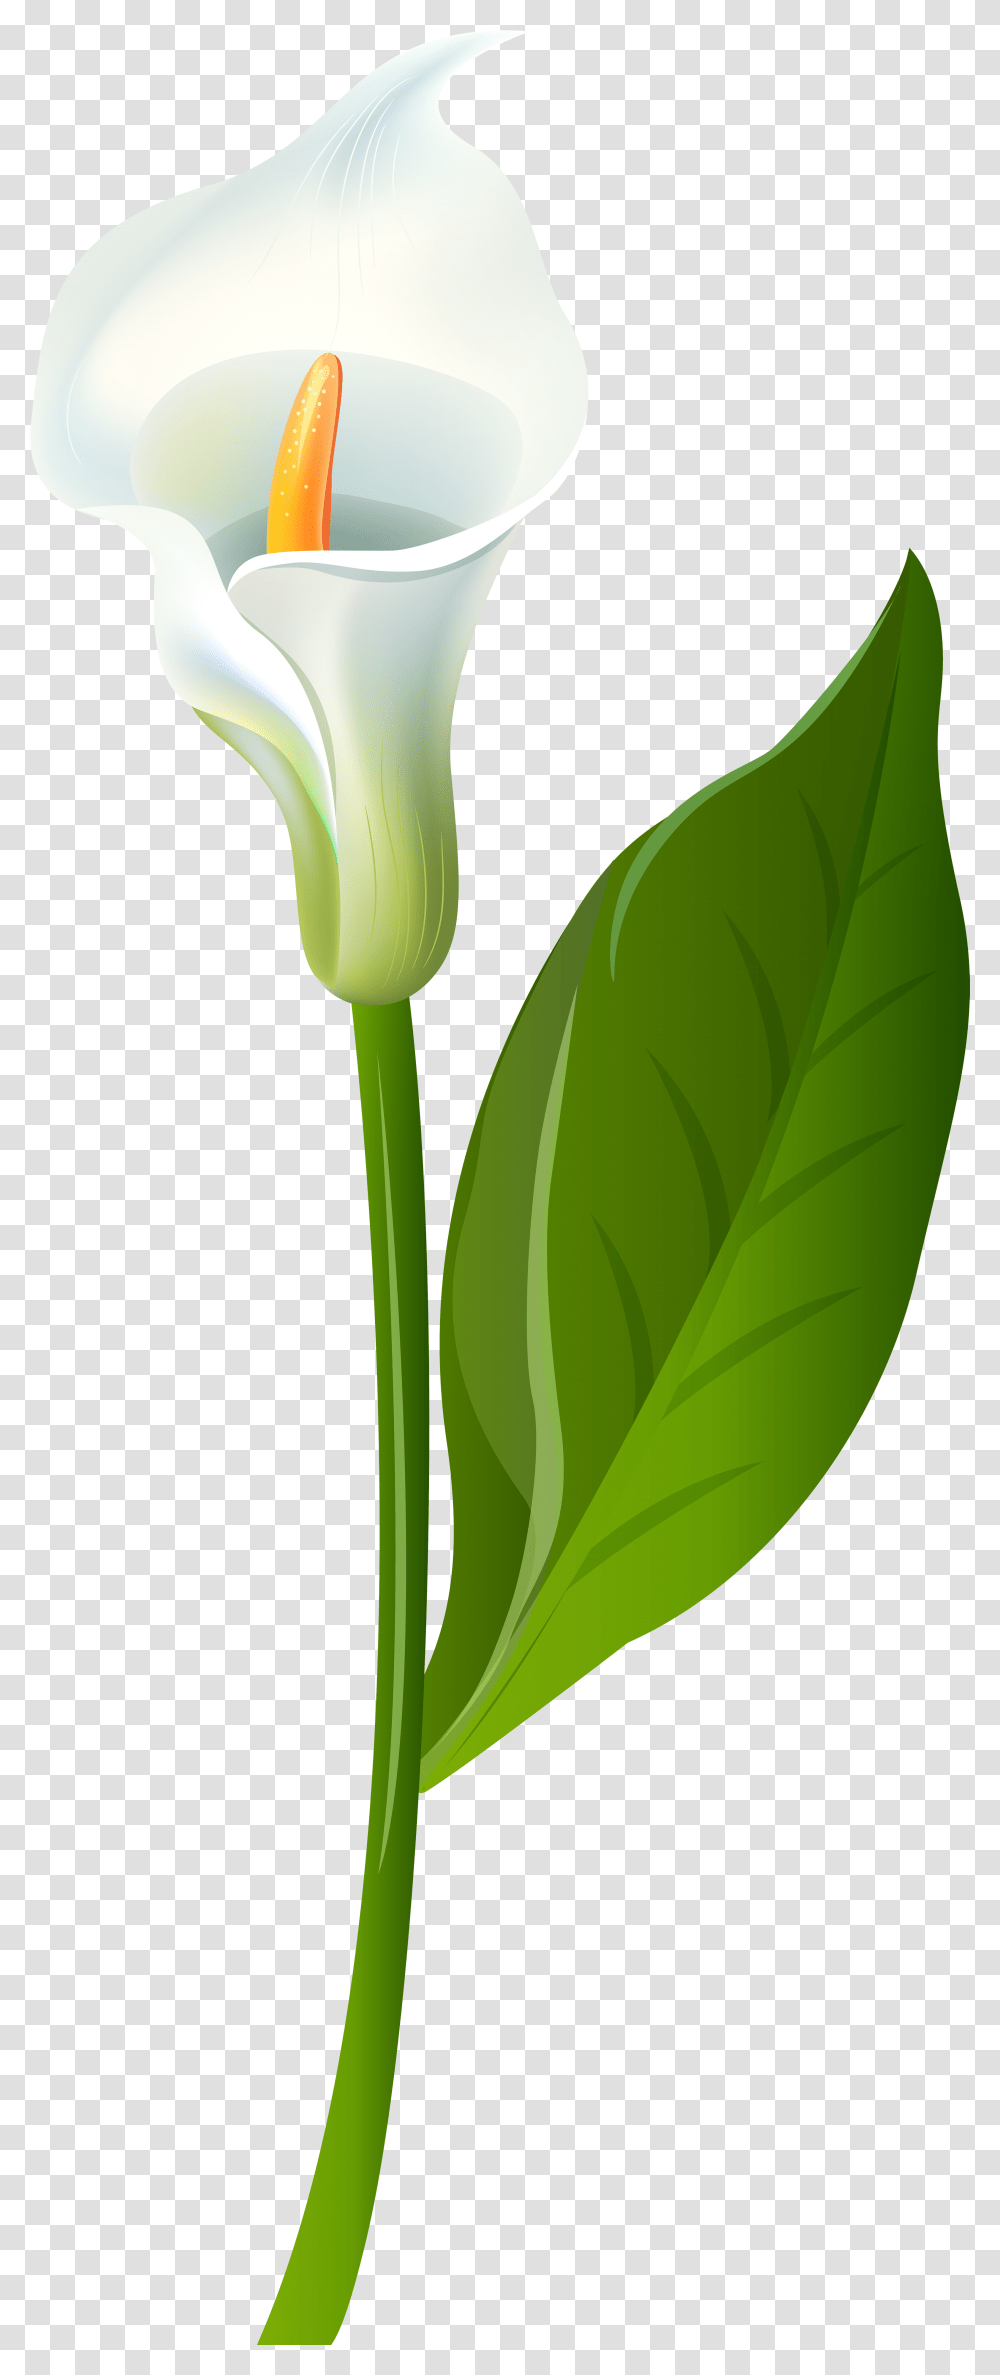 Leaf Flower Plant Stem Green Calla Lily Clipart, Blossom, Tulip, Petal, Bud Transparent Png